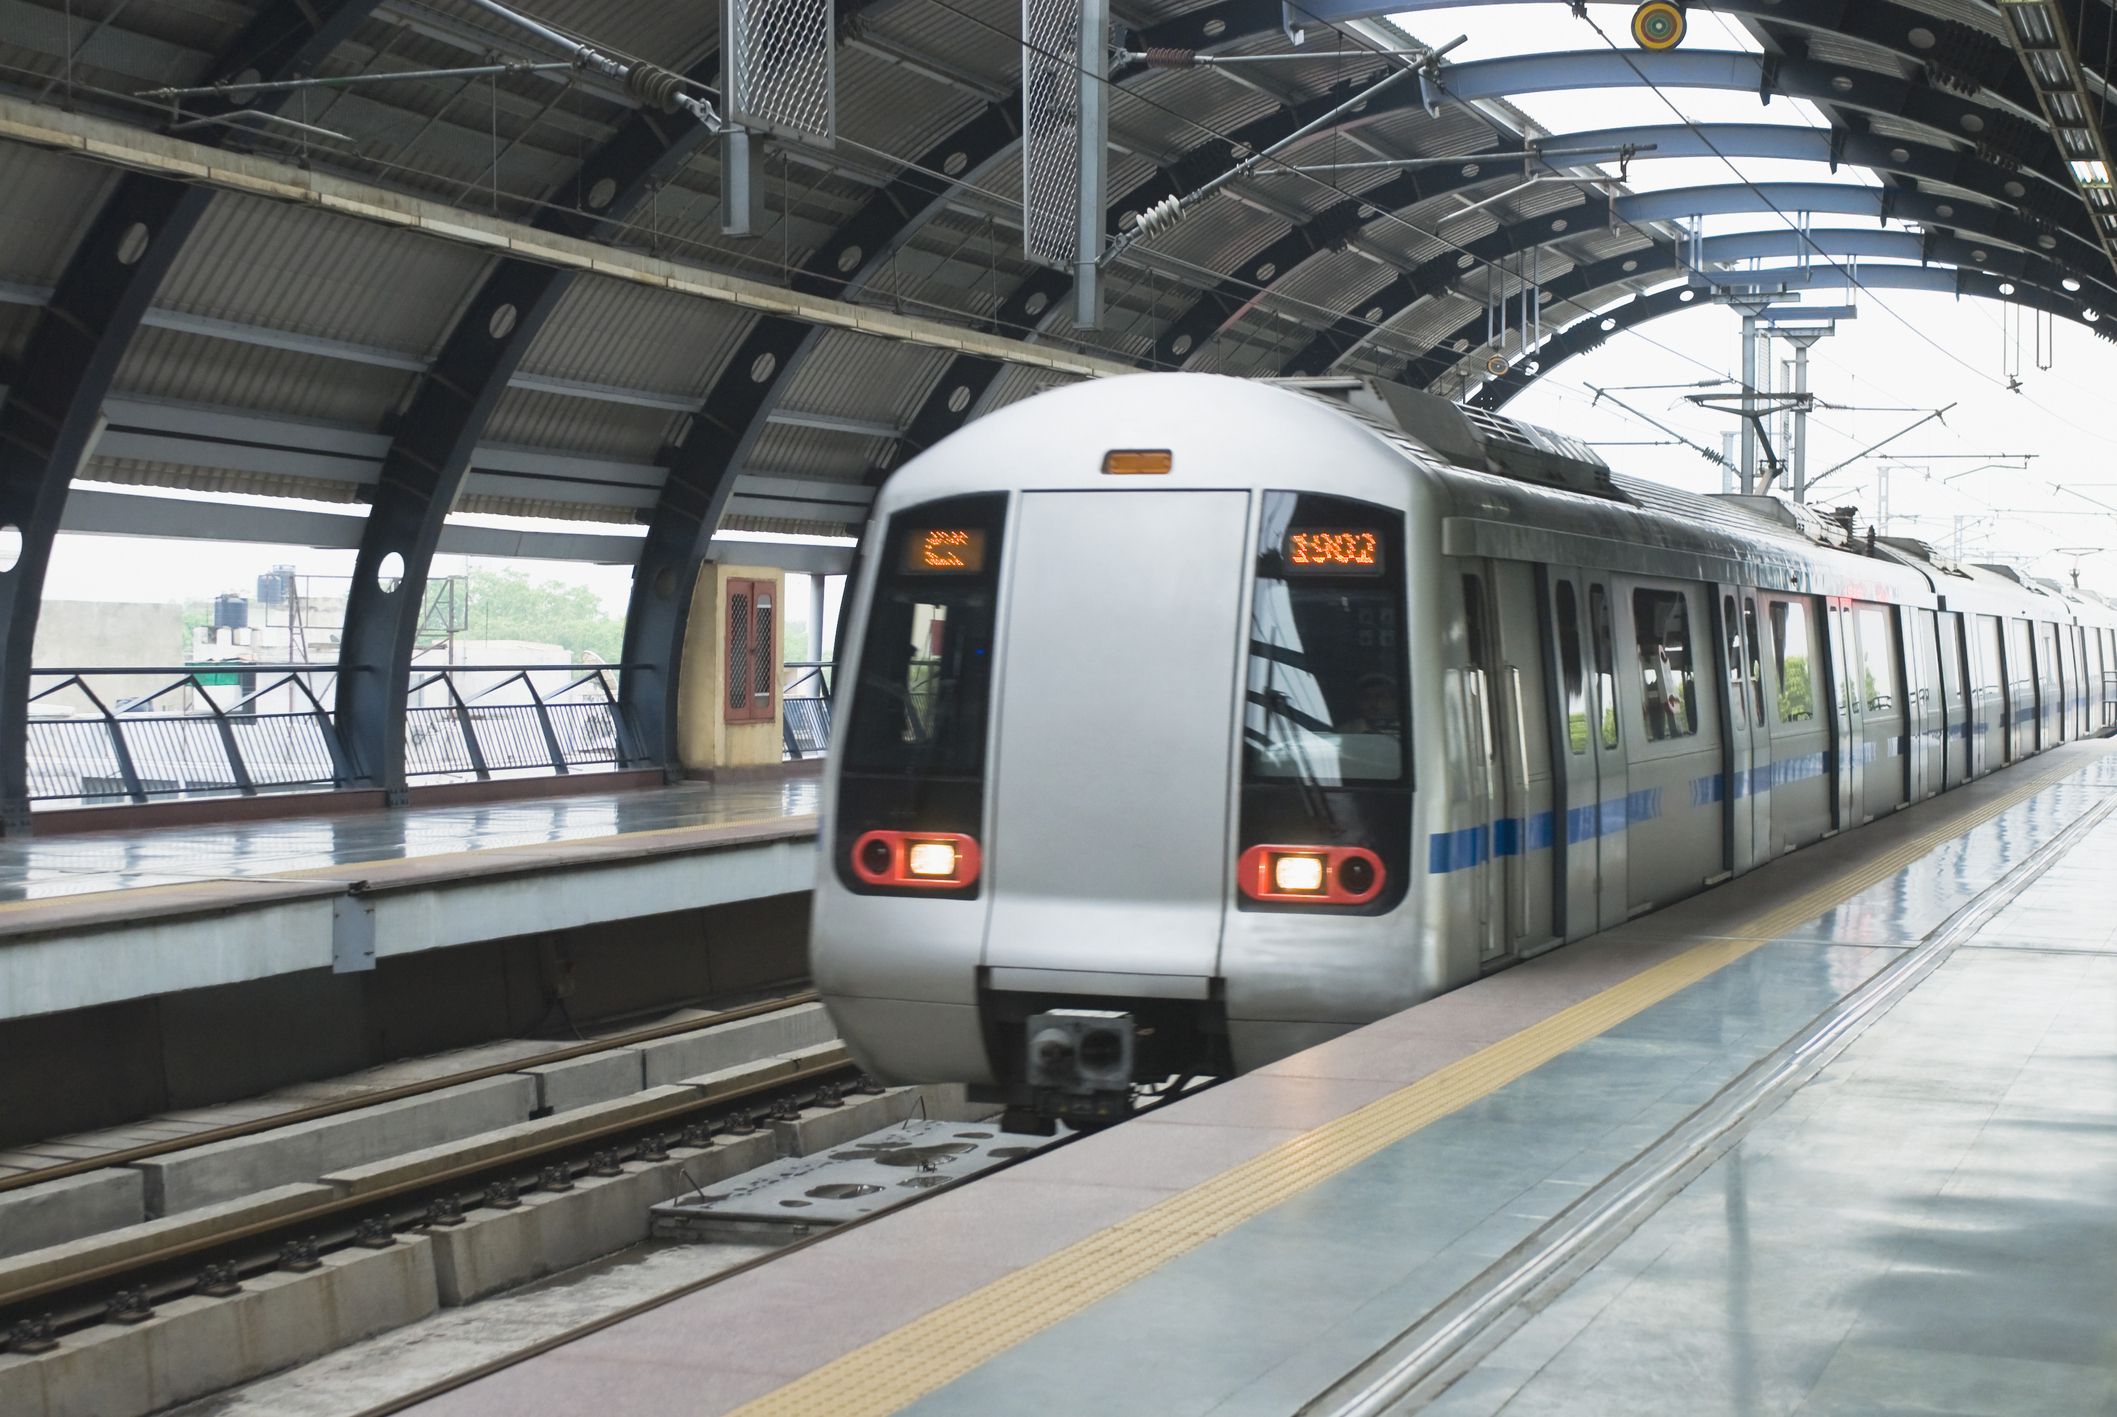 delhi metro travel